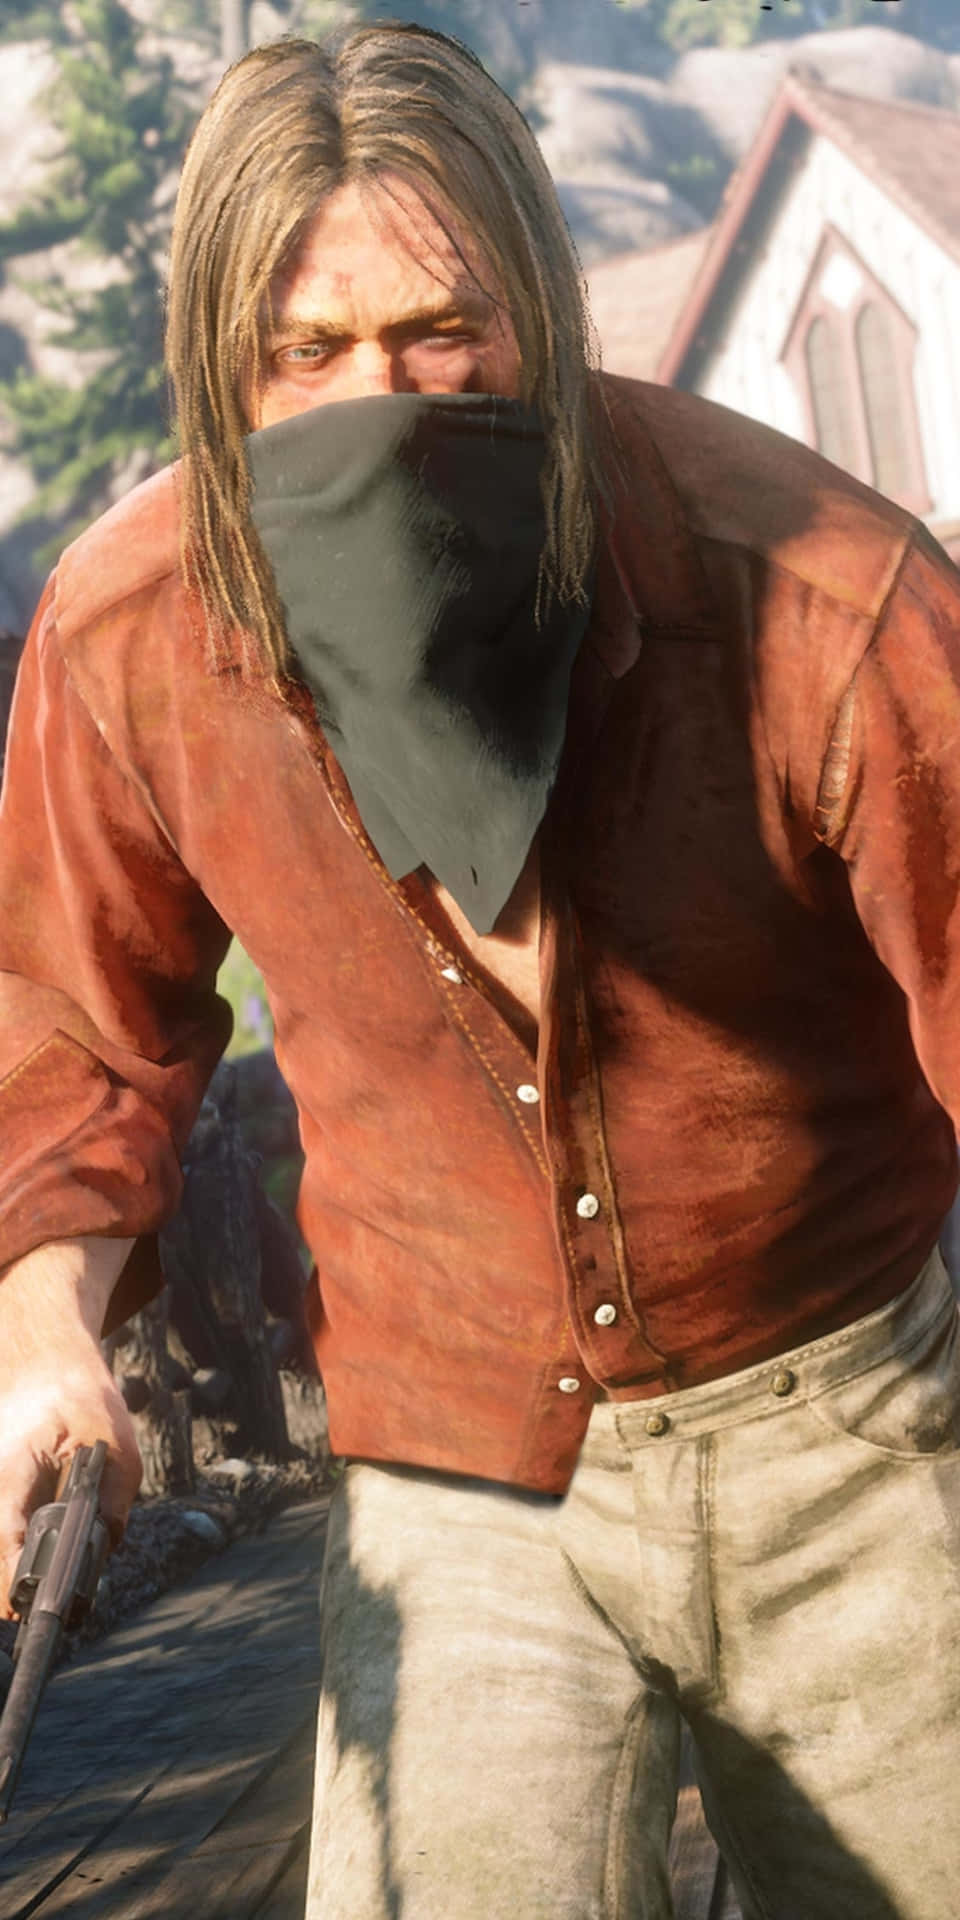 Pixel 3 Red Dead Redemption 2 Background Masked Man Holding Pistol